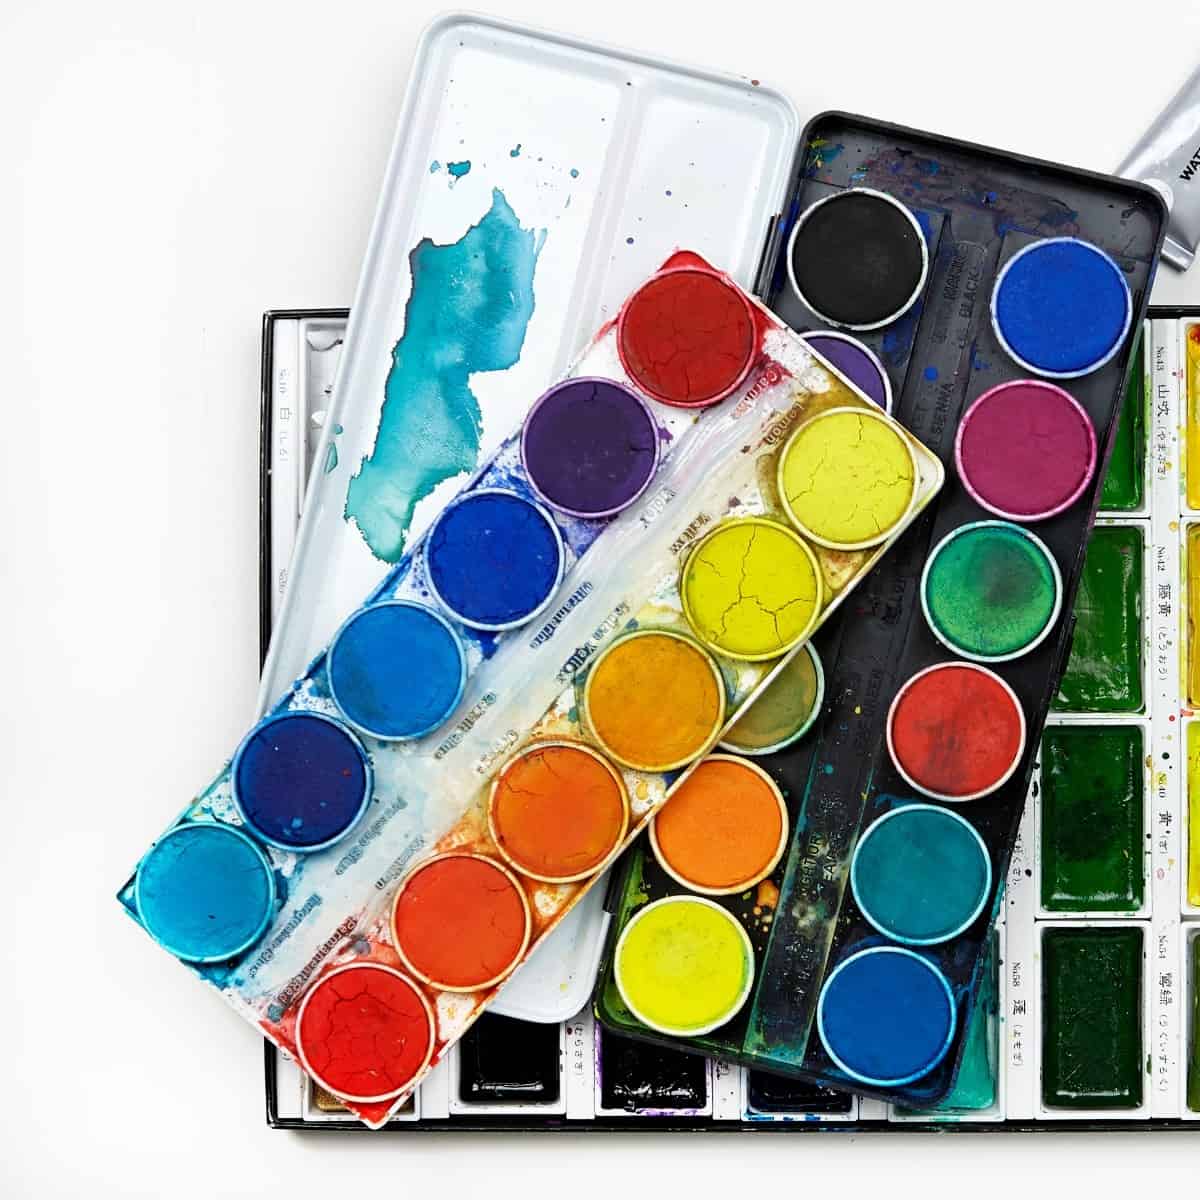 Princeton Heritage Watercolor Brushes– Let's Make Art